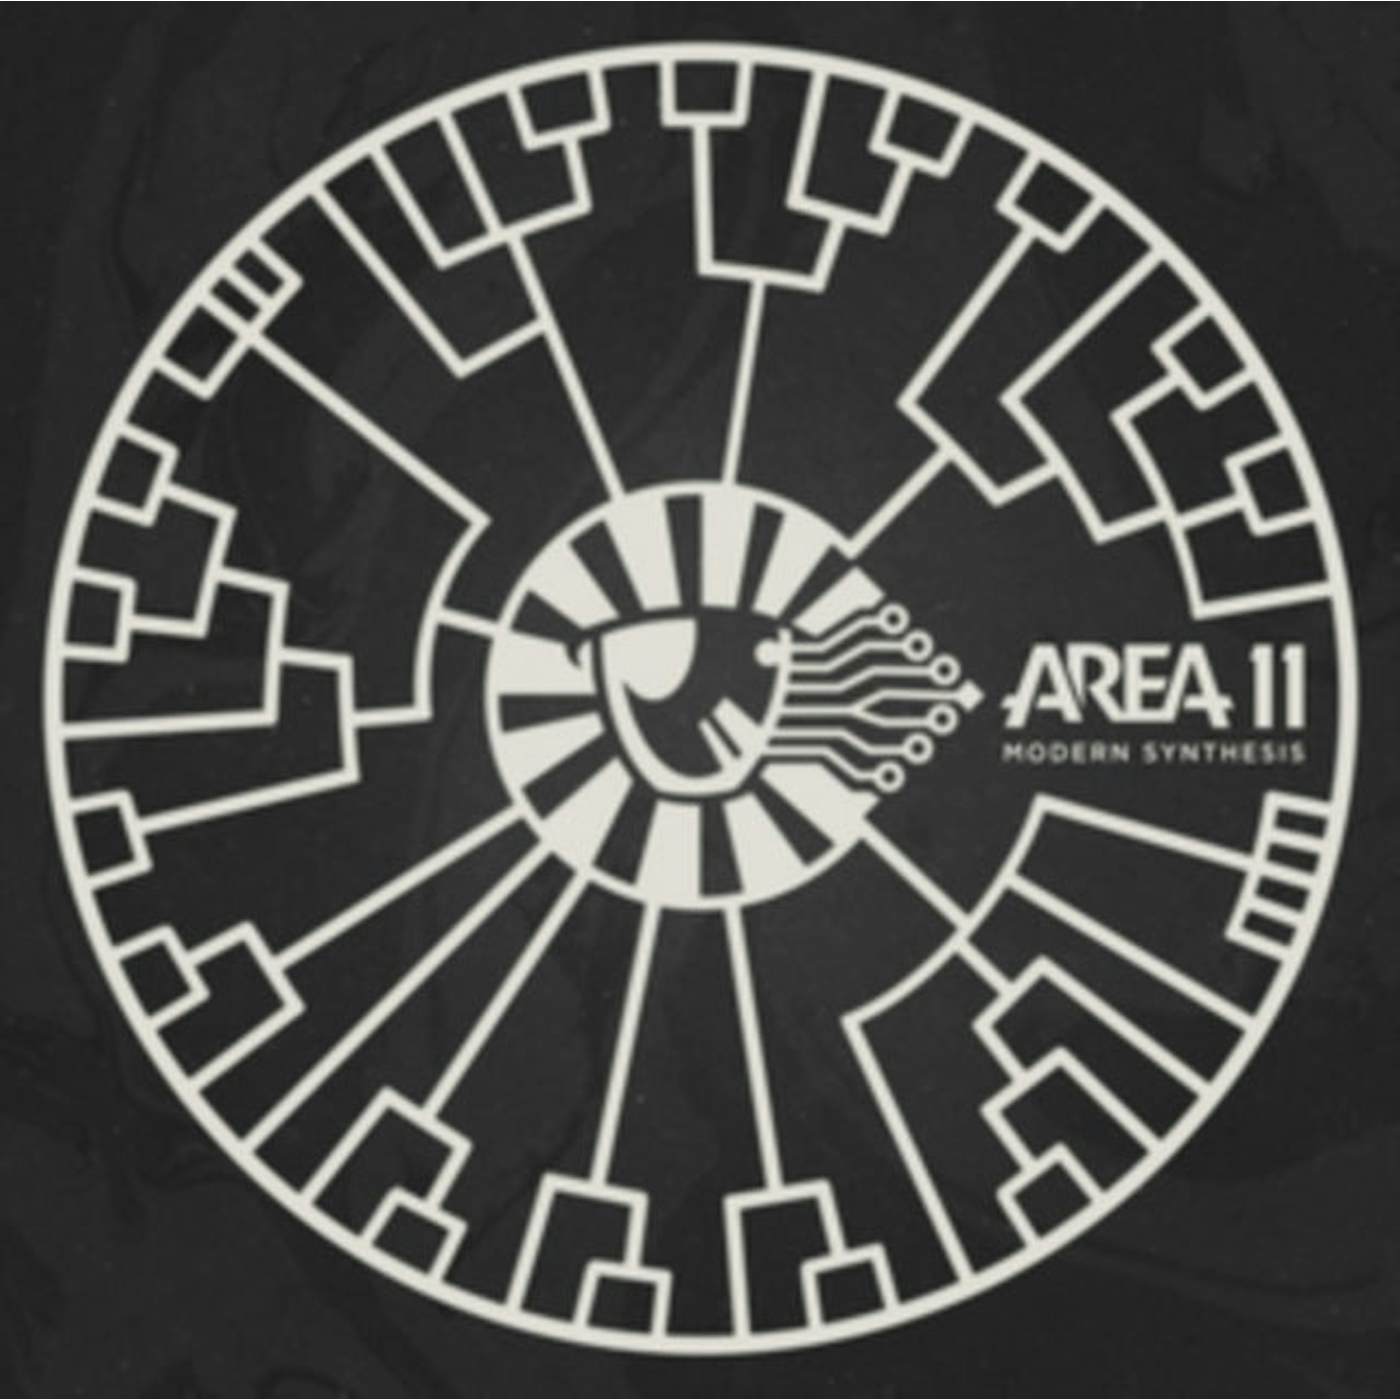 Area 11 LP - Modern Synthesis (Vinyl)